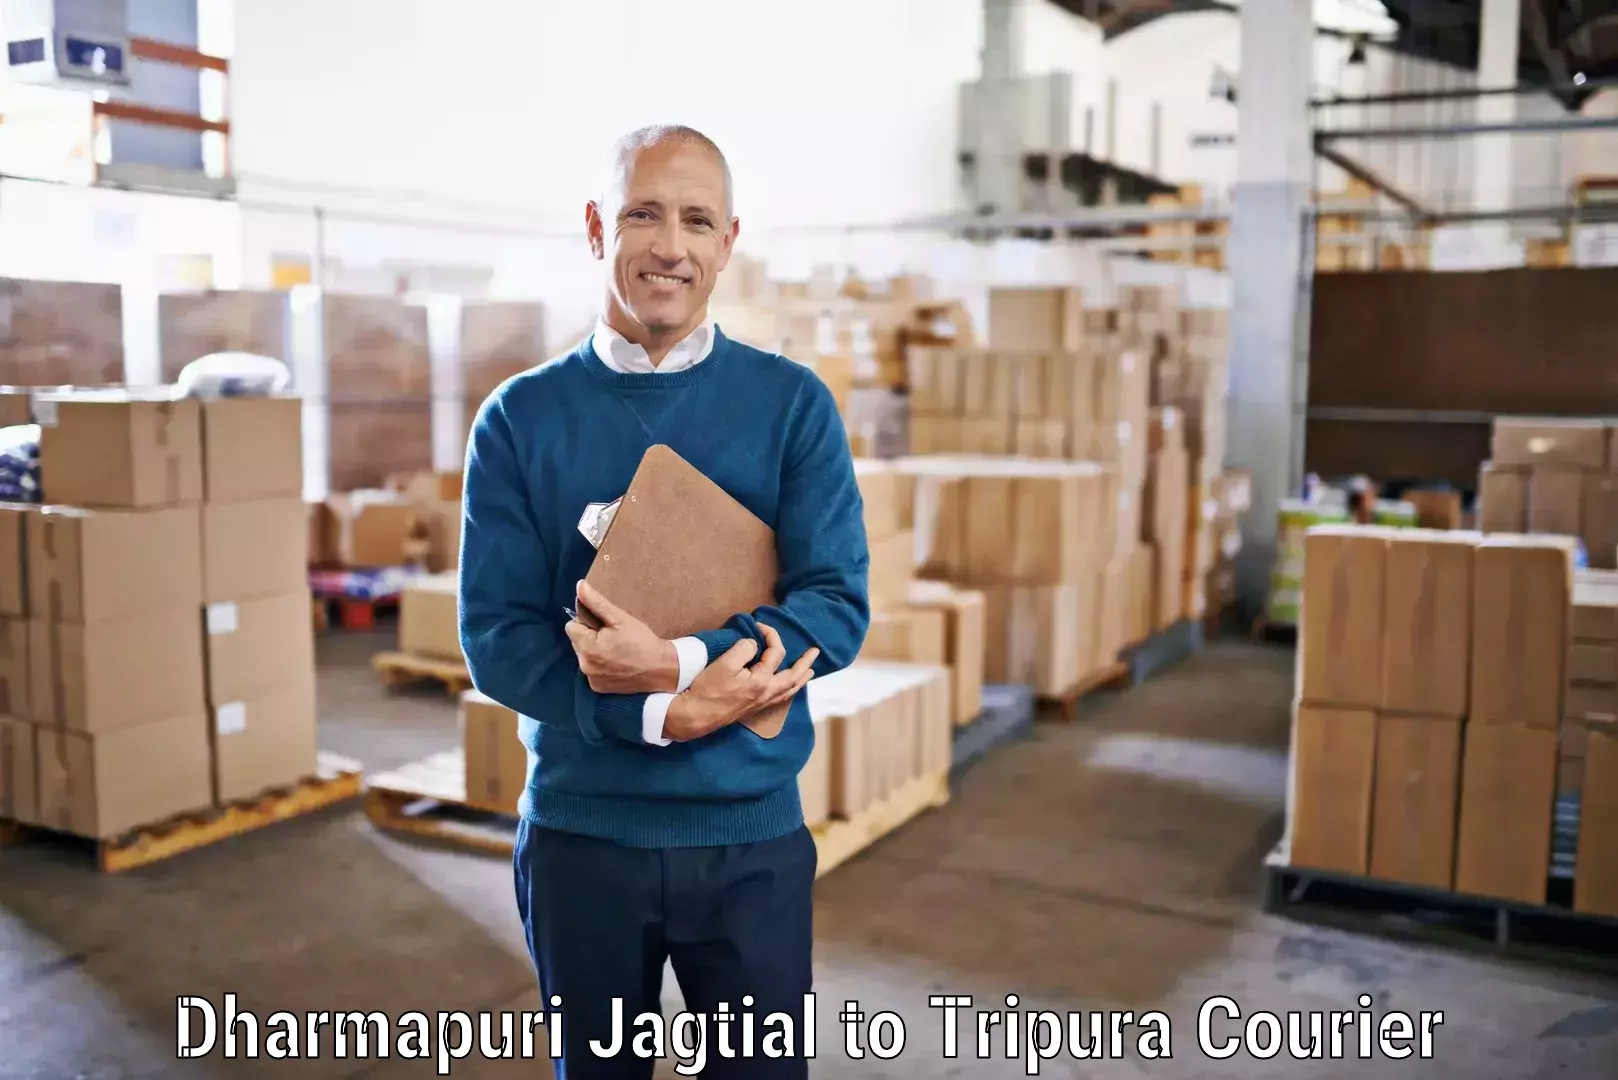 Reliable delivery network Dharmapuri Jagtial to Amarpur